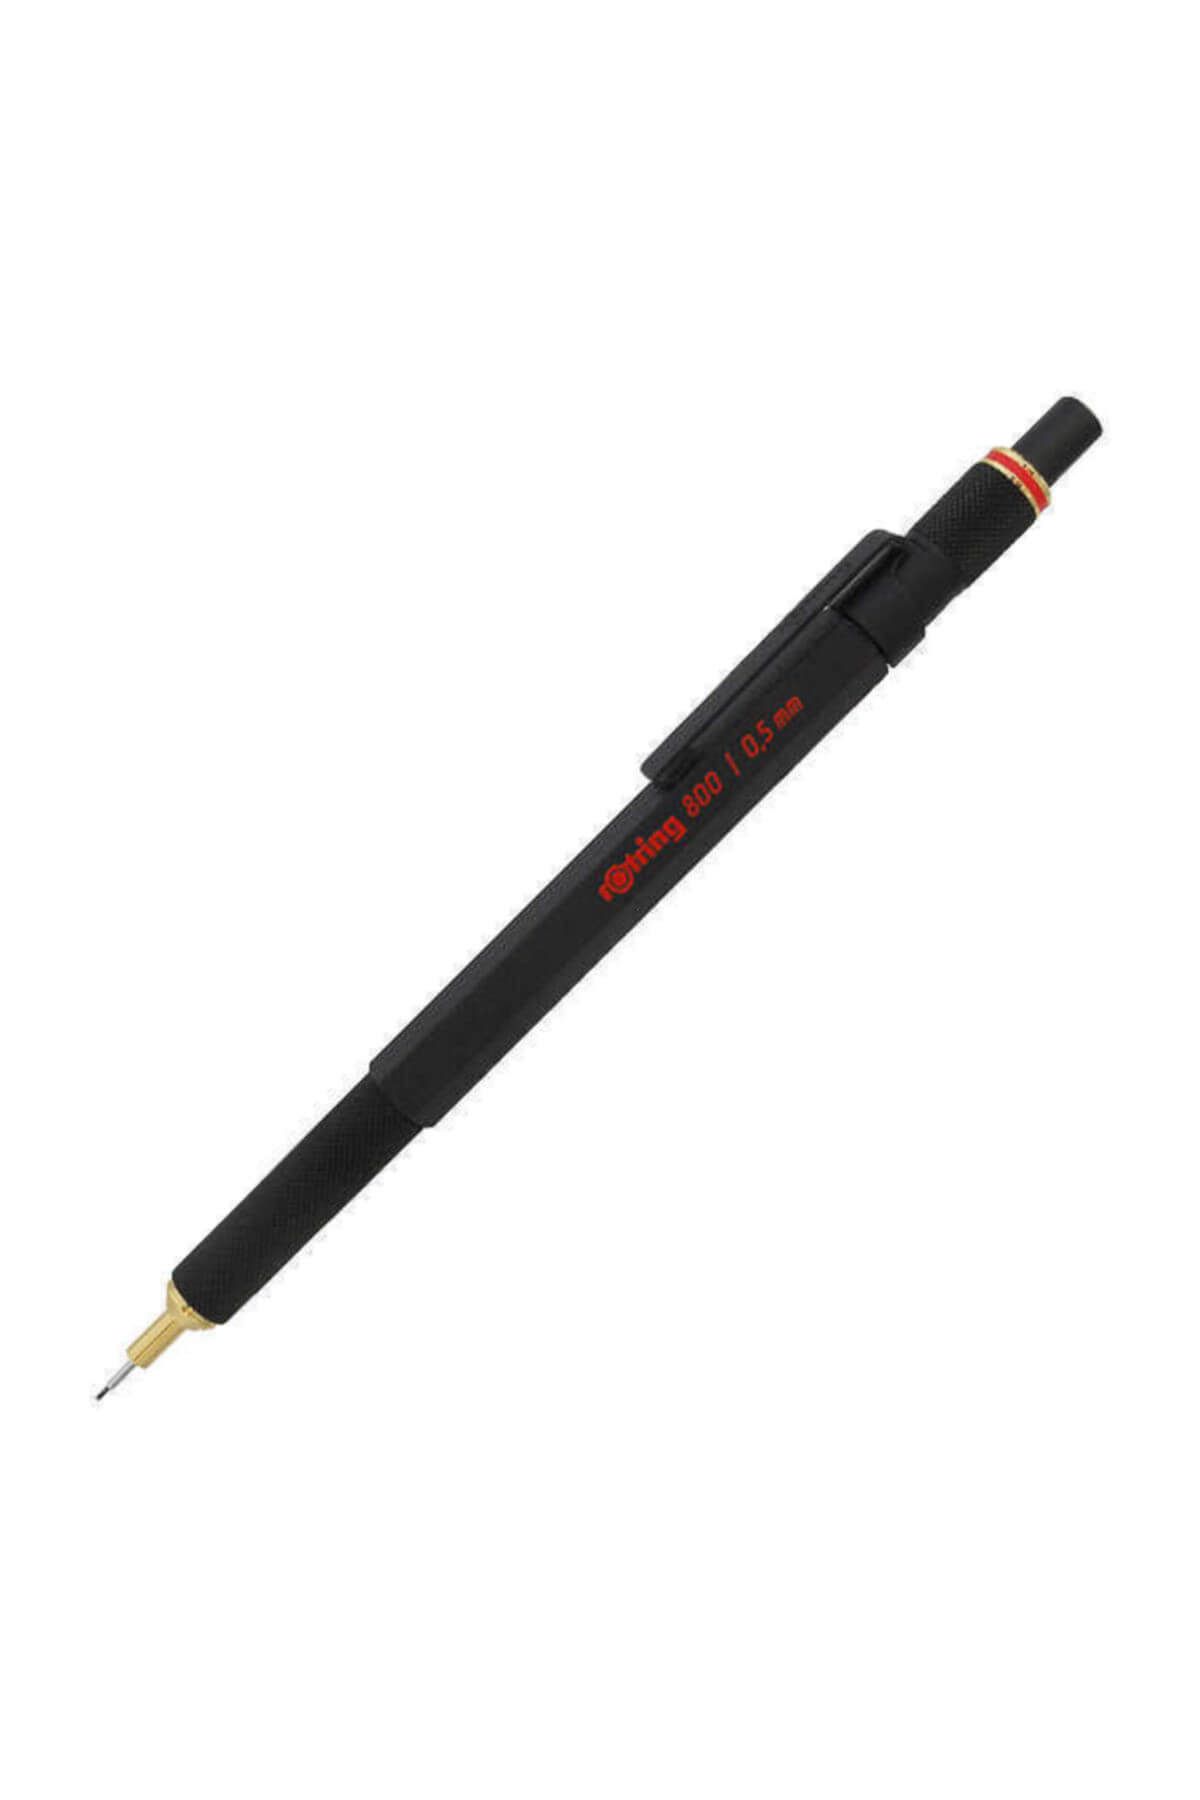 Rotring 800 Versatil Kalem 0.5 mm Siyah Fiyatı, Yorumları - TRENDYOL